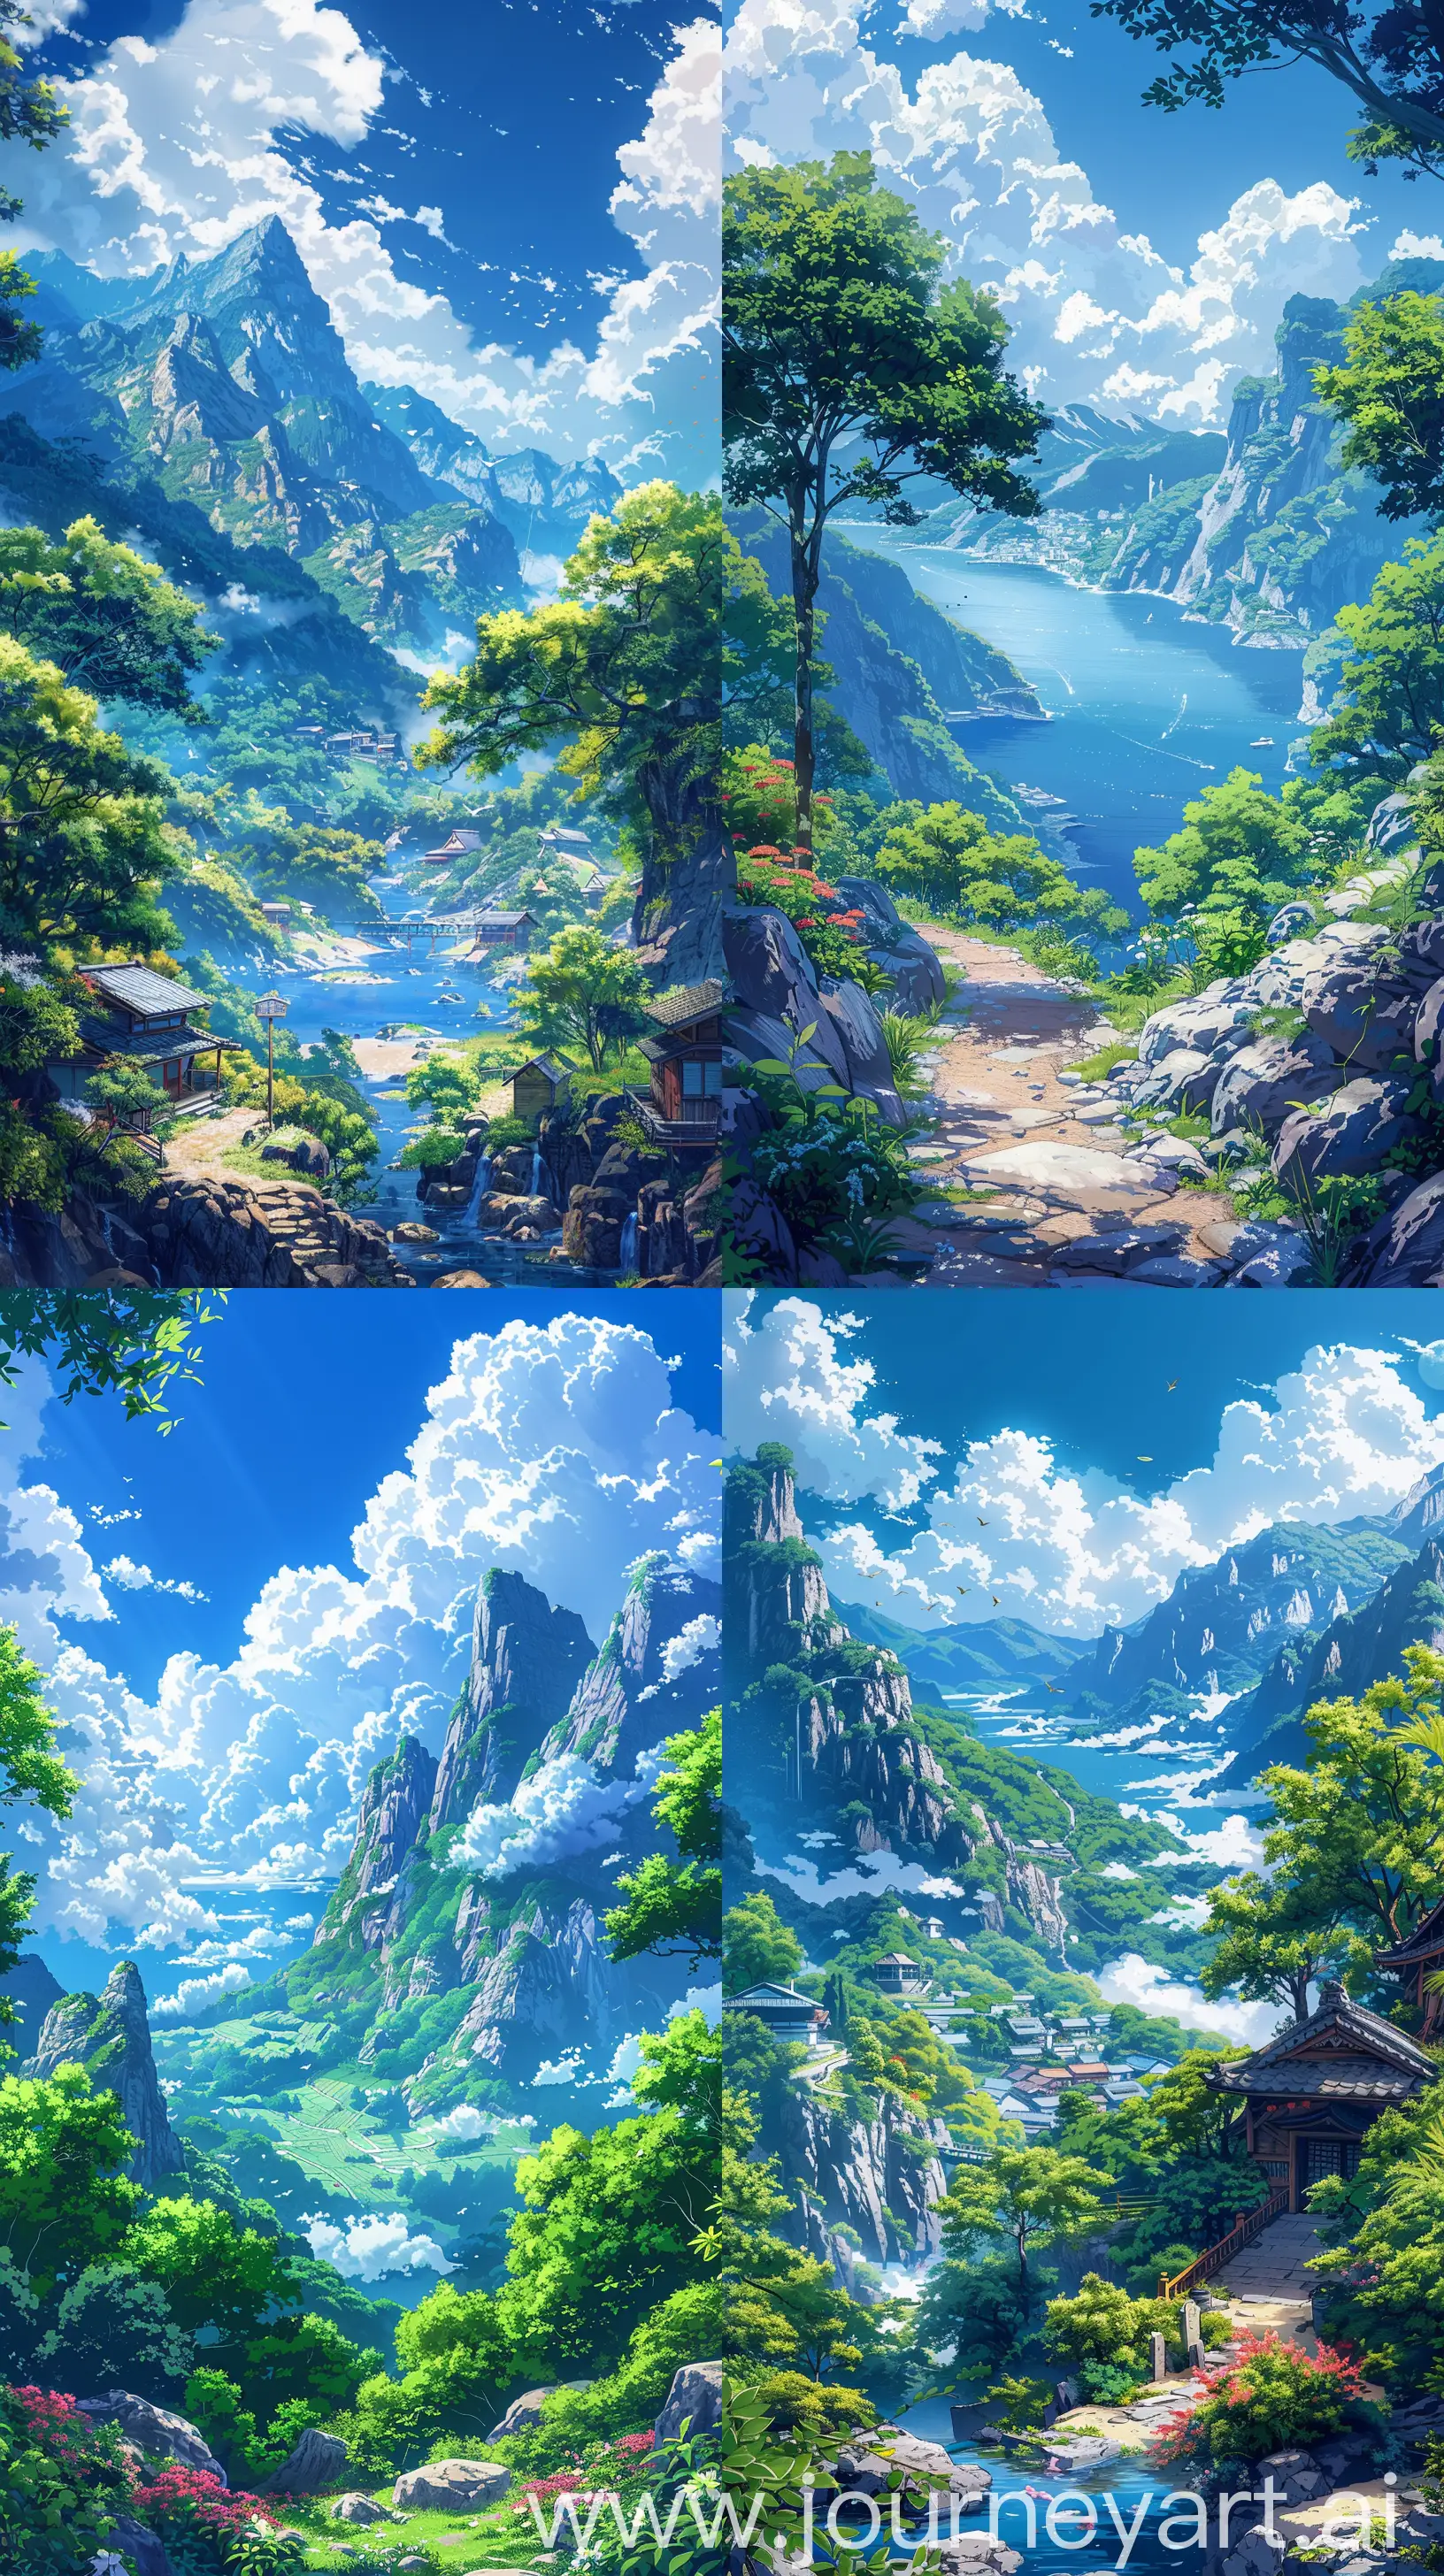 Tranquil-Anime-Summer-Scenery-Varied-Nature-Views-in-Makoto-Shinkai-Style